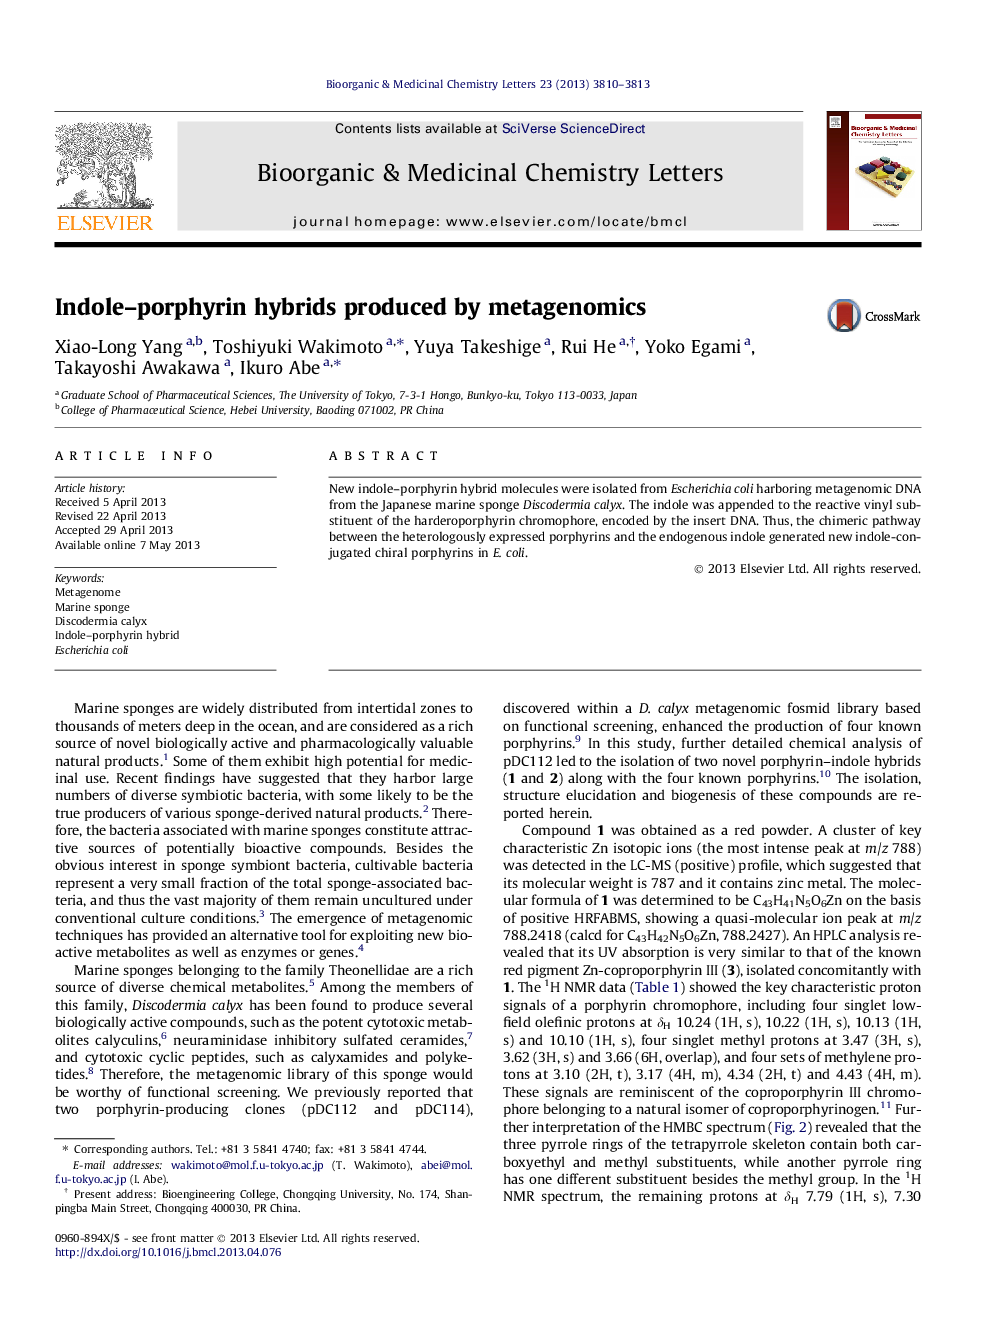 Indole-porphyrin hybrids produced by metagenomics